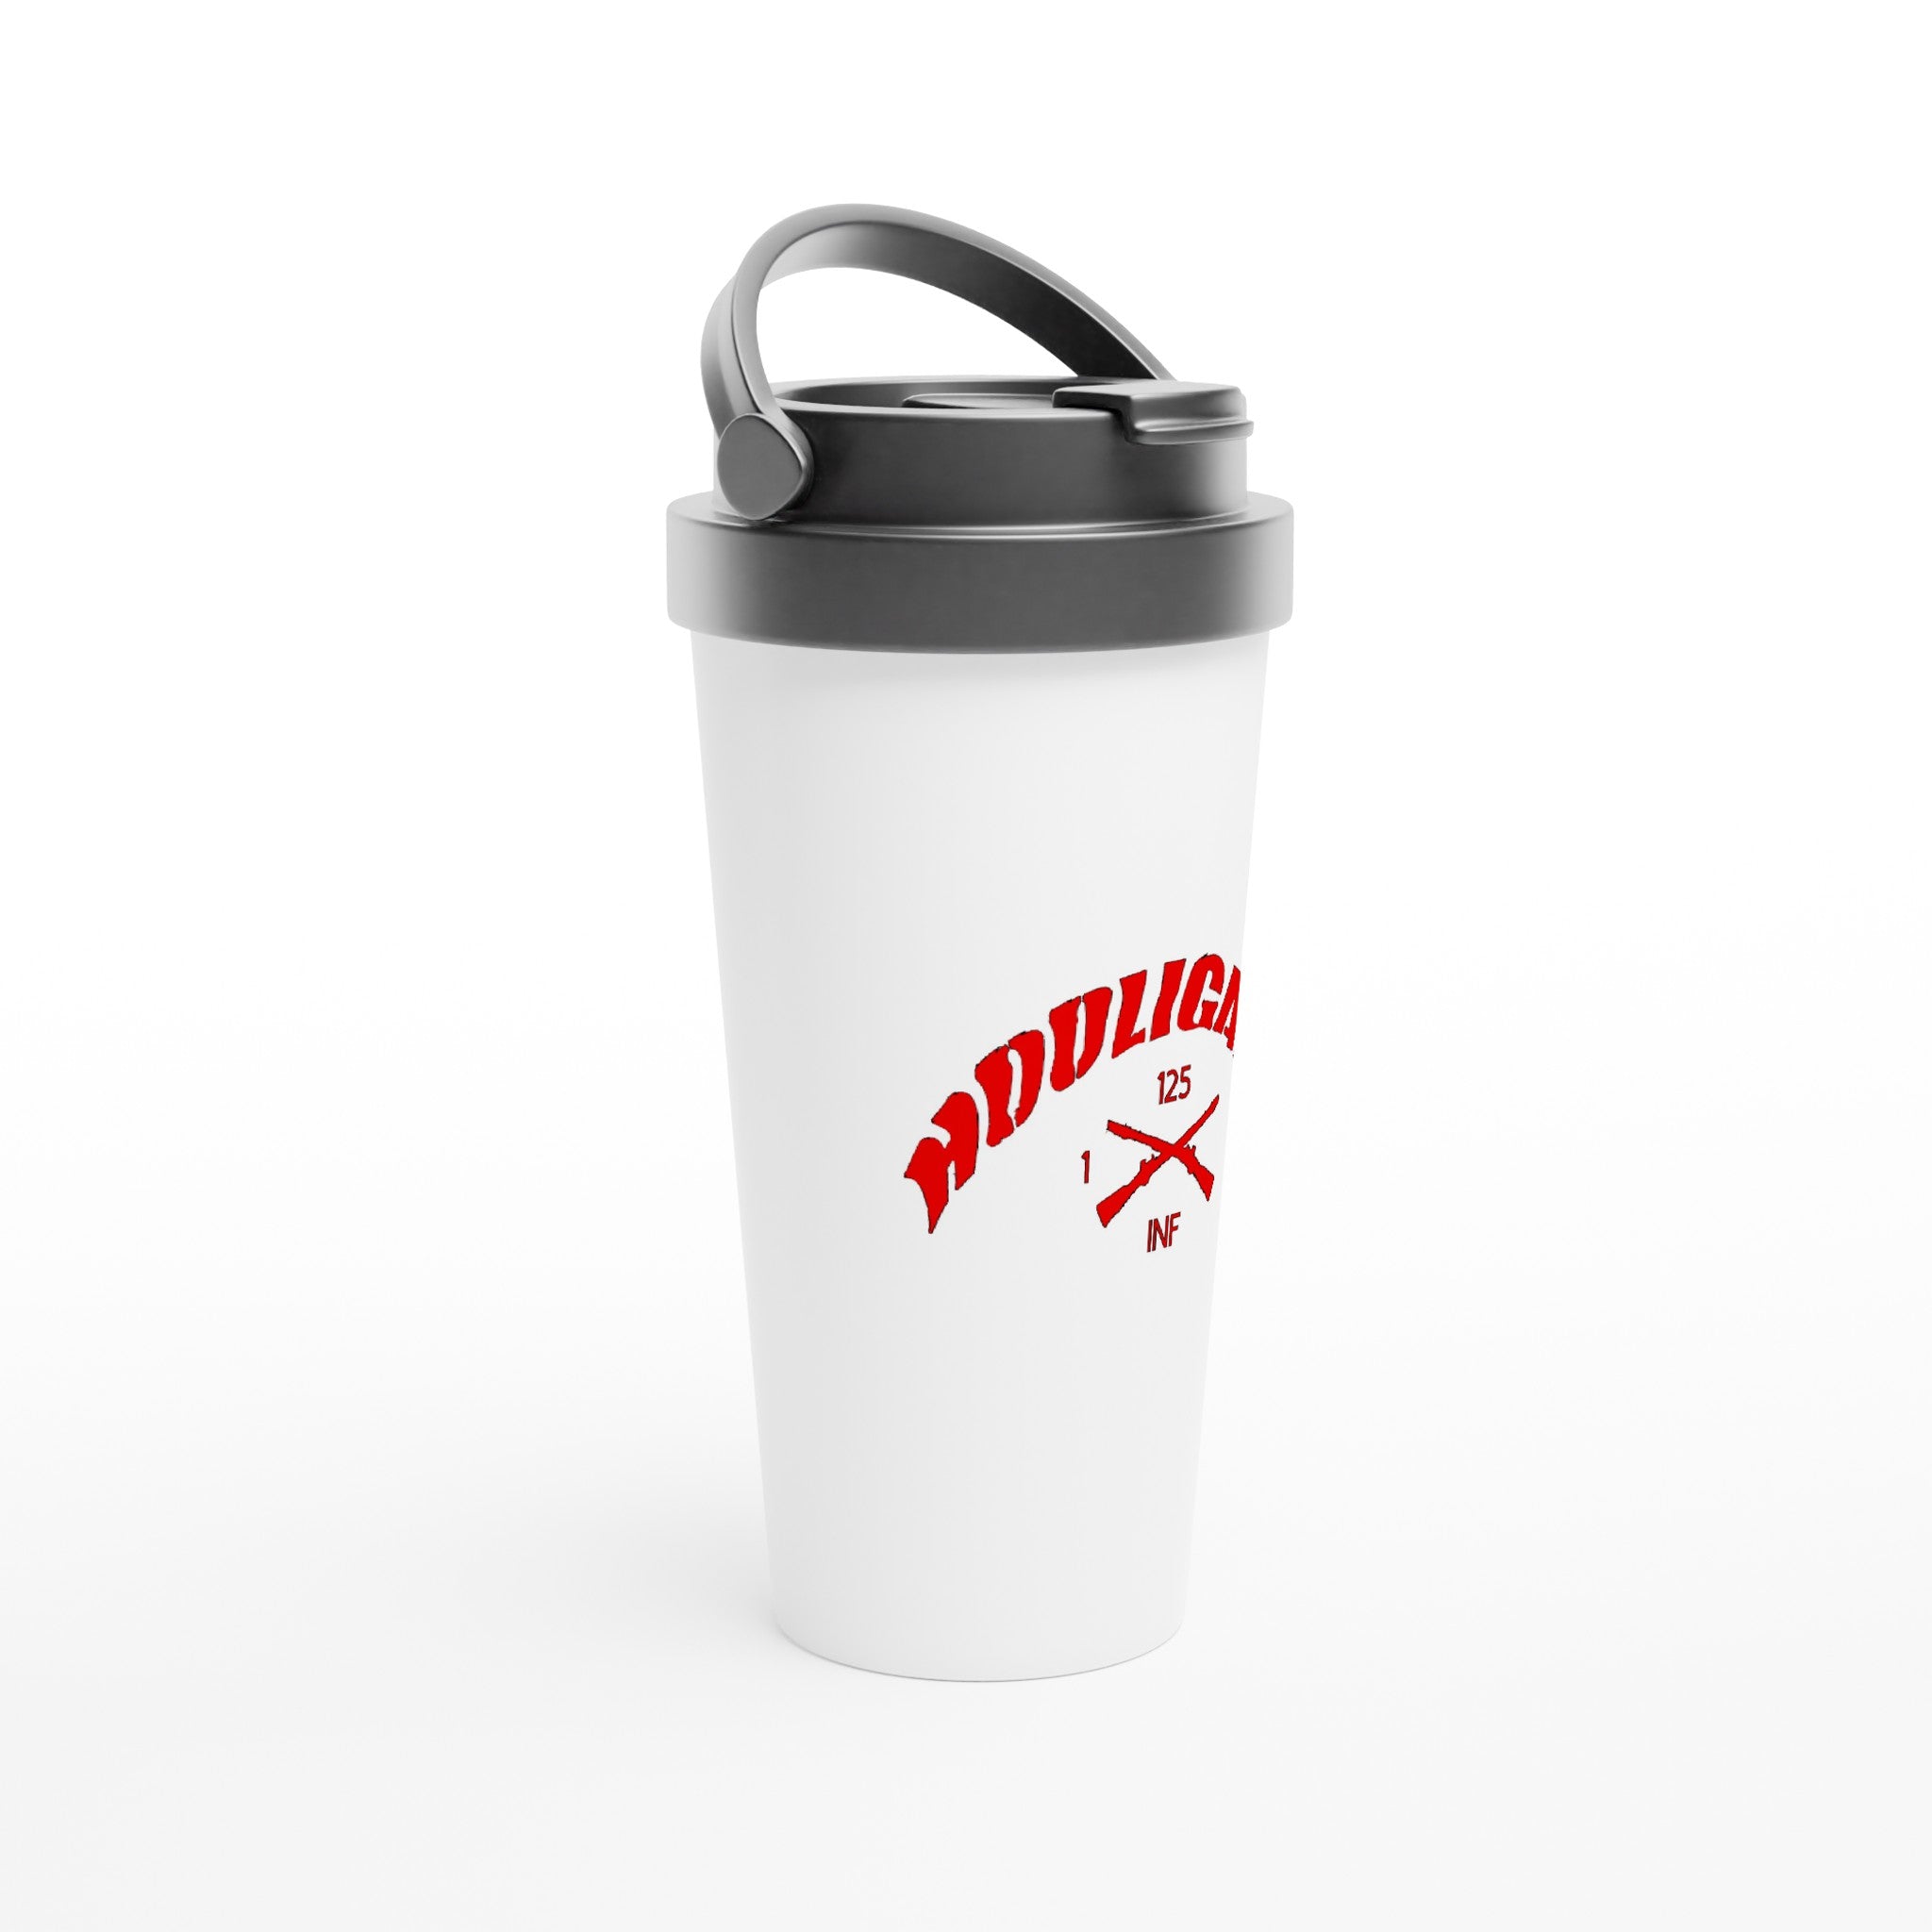 Hooligan Coffee Company Stainless Steel Travel Mug with Handle, 14oz